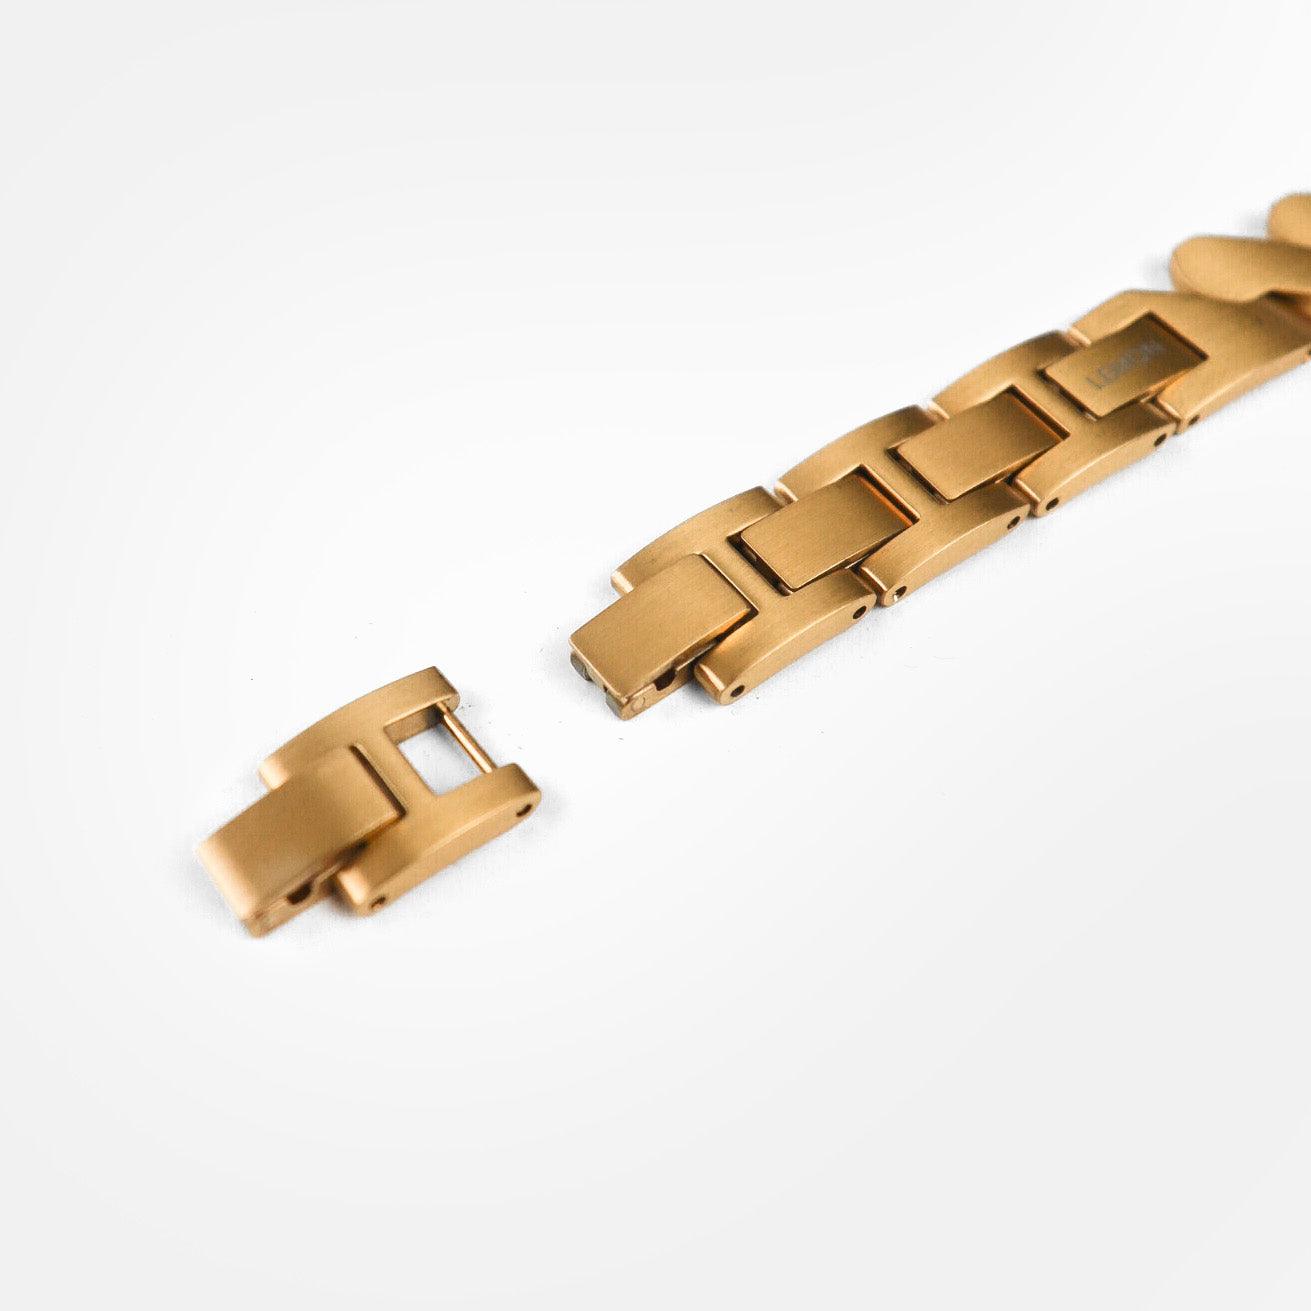 (St-Steel) Lightning Apple Watch Bracelet - 18k Gold Plated